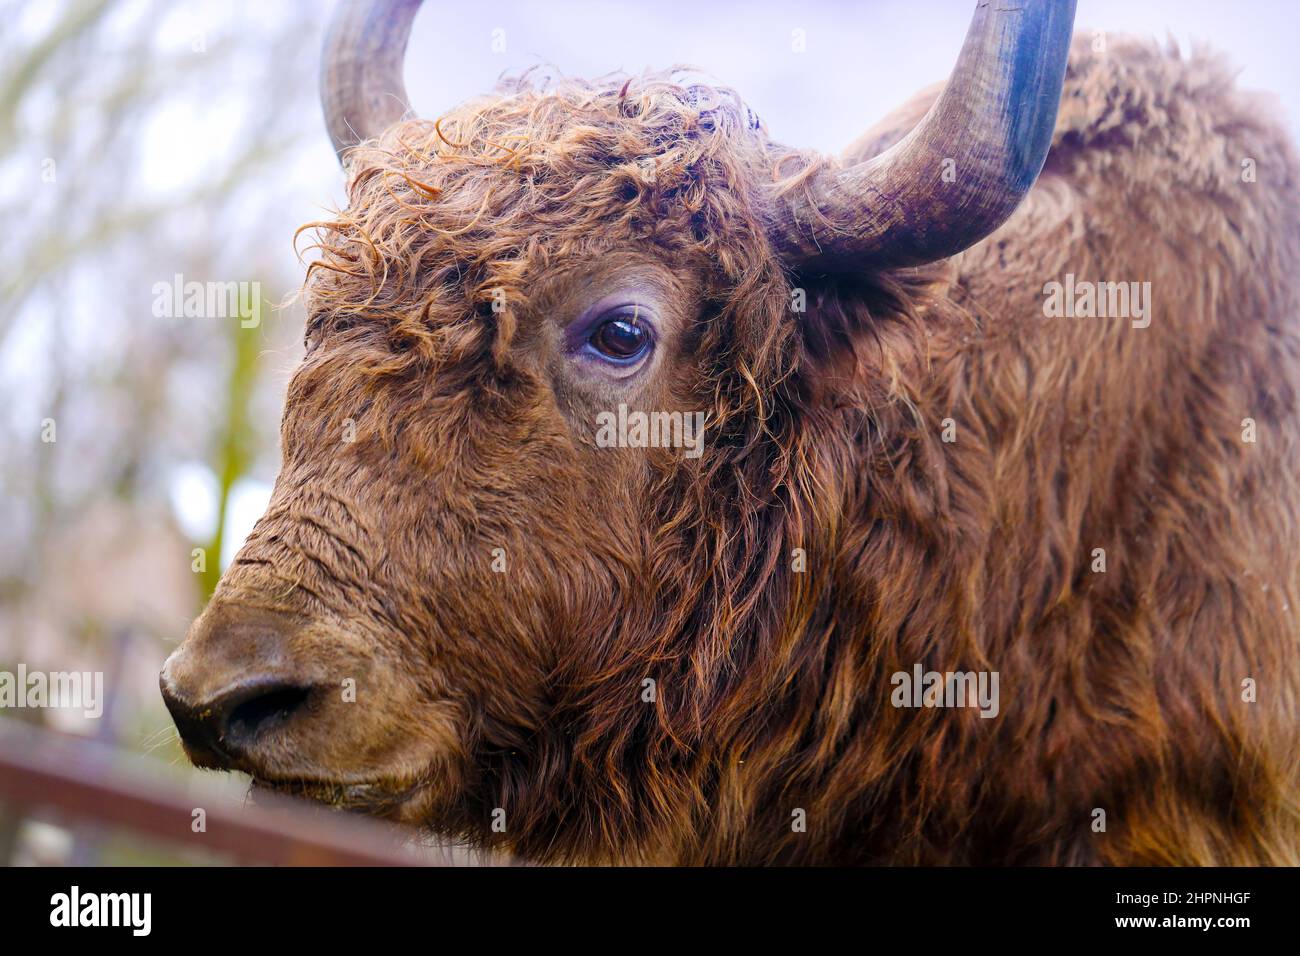 beautiful portrait of a cow animal big Yak artiodactyl mammal from the genus of real bulls Stock Photo